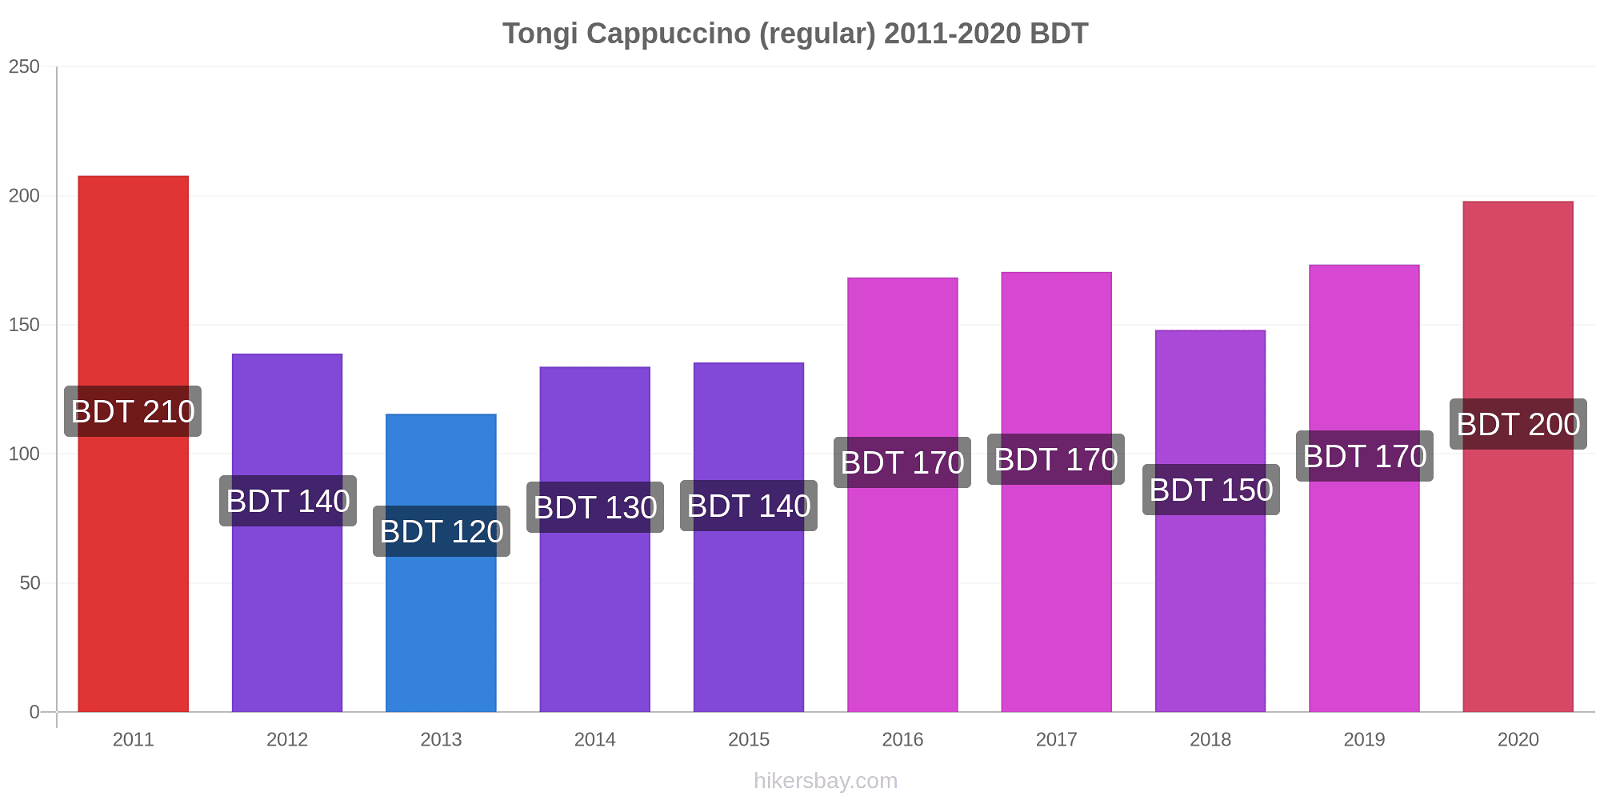 Tongi price changes Cappuccino (regular) hikersbay.com